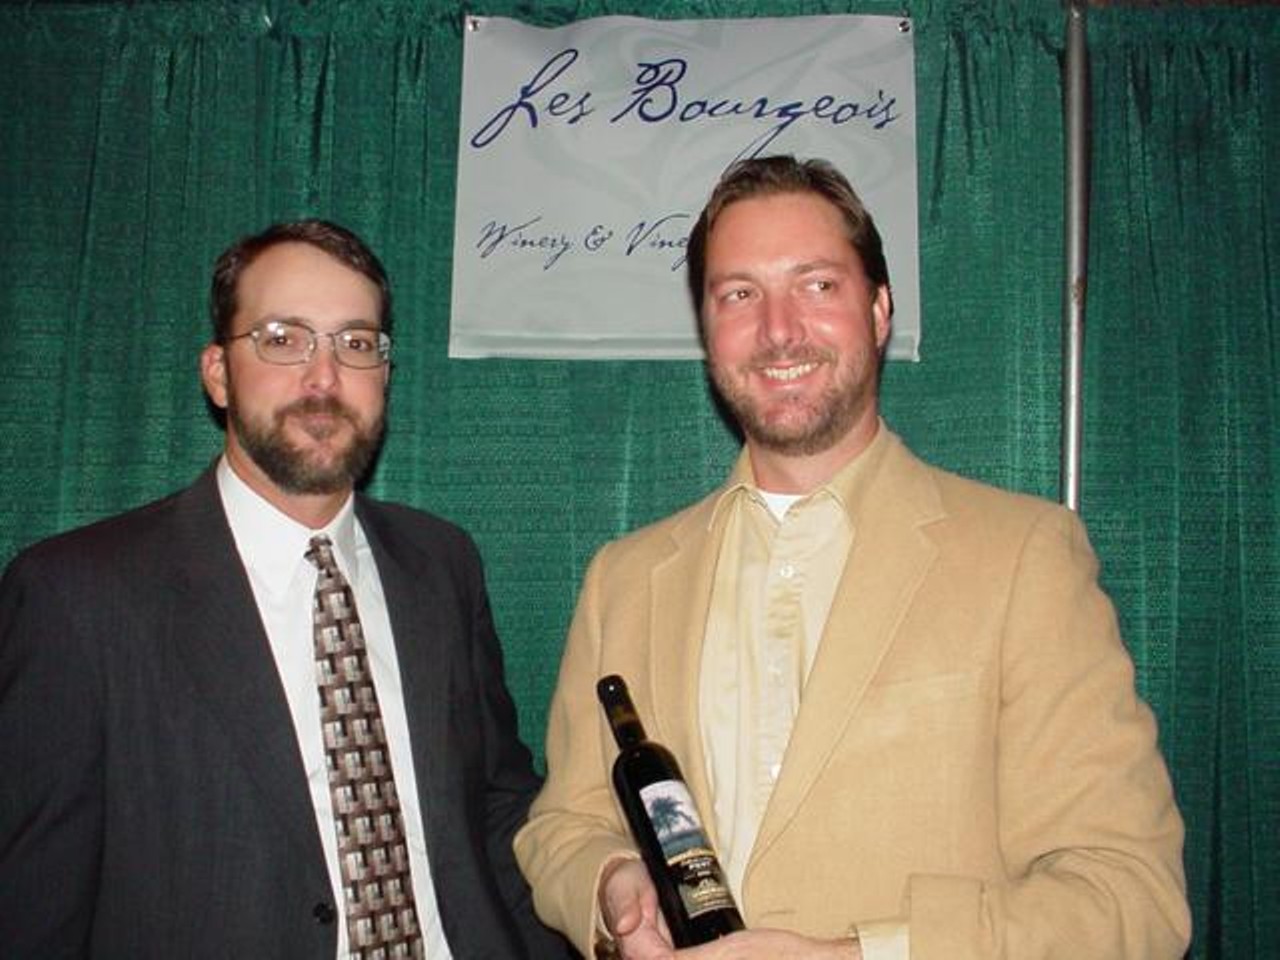 Missouri Wine Tasting 2004 @ Hilton St. Louis Frontenac